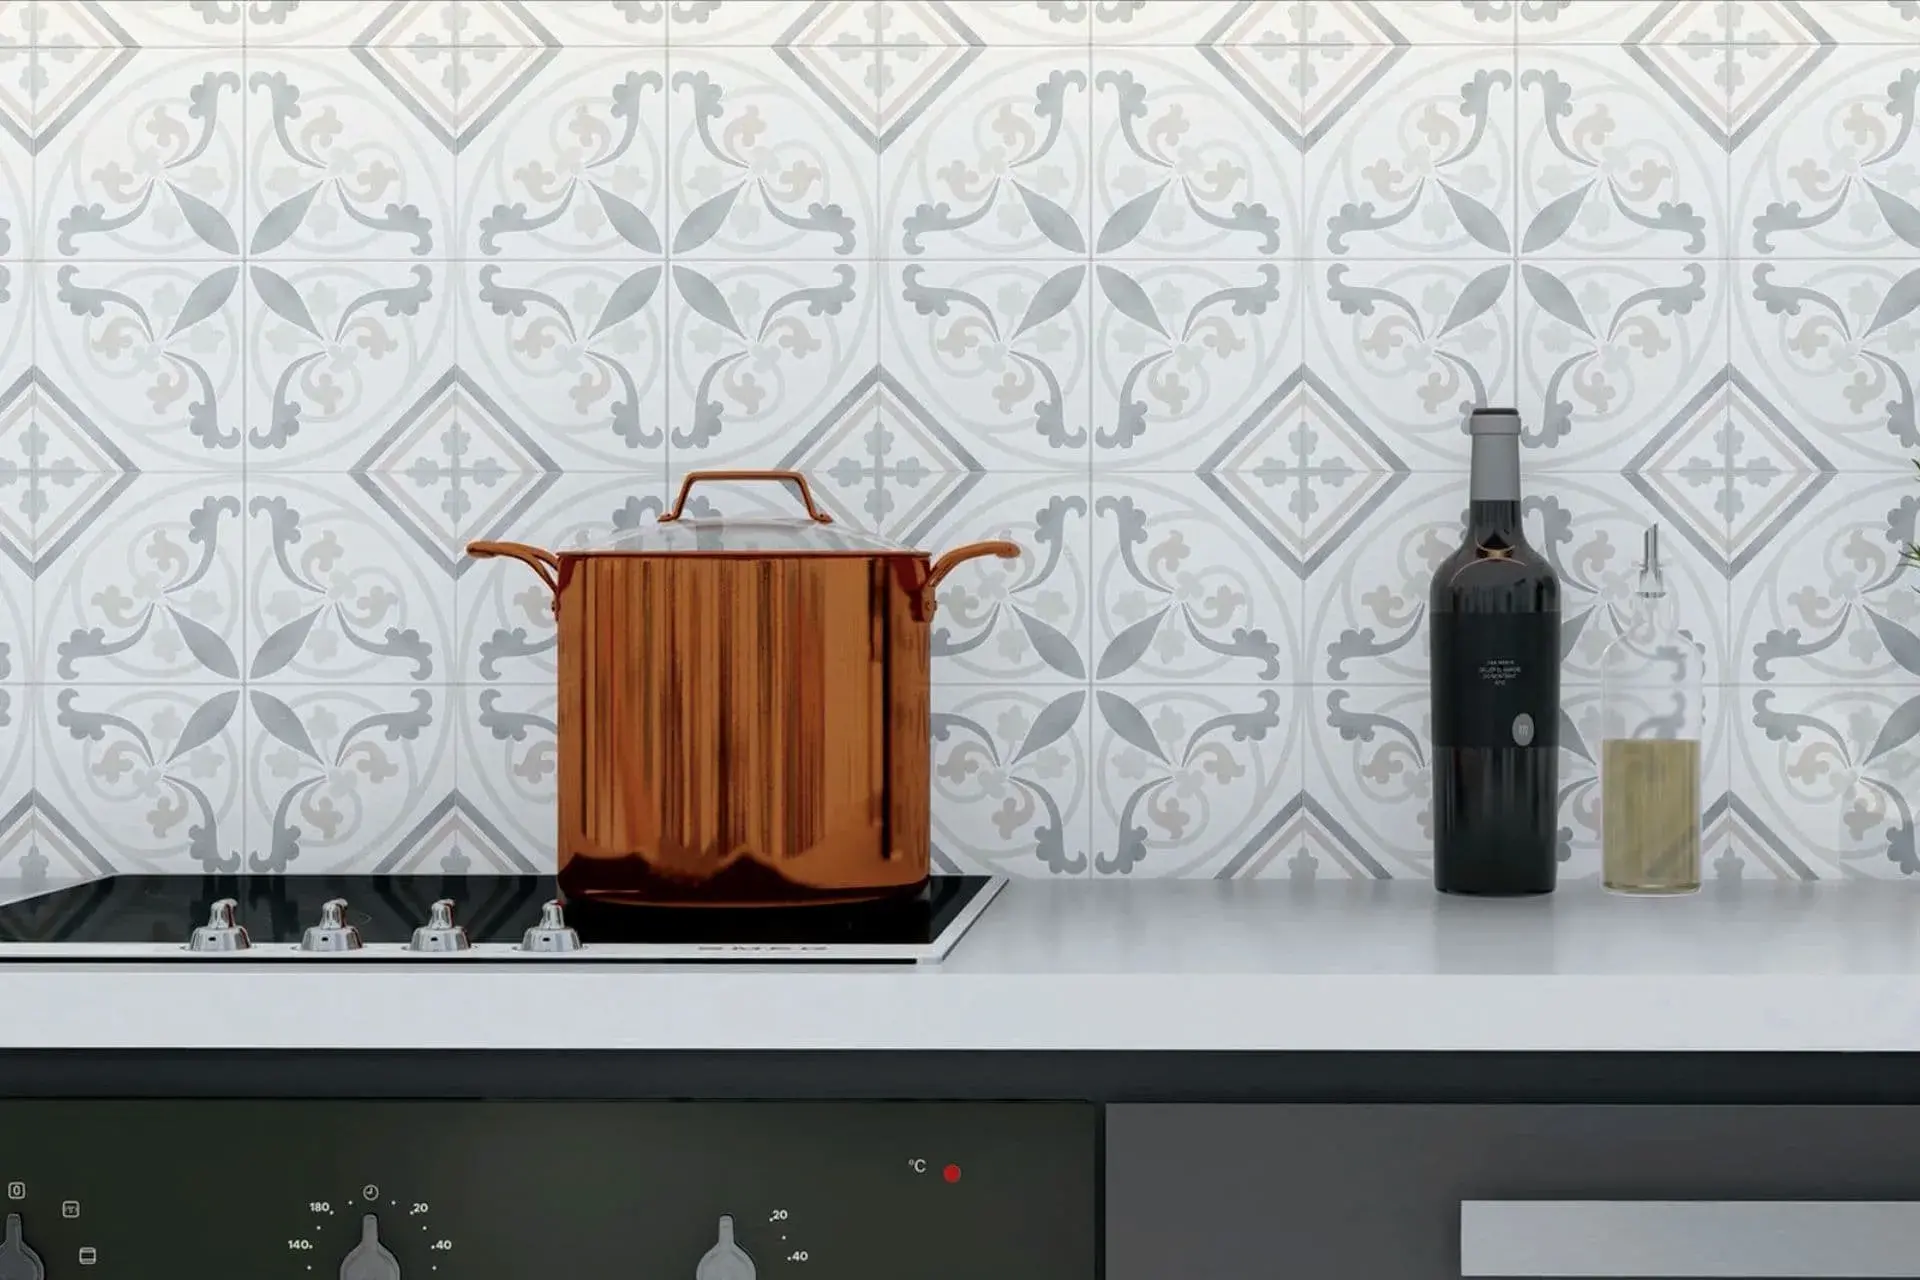 Vintage kitchen tiles